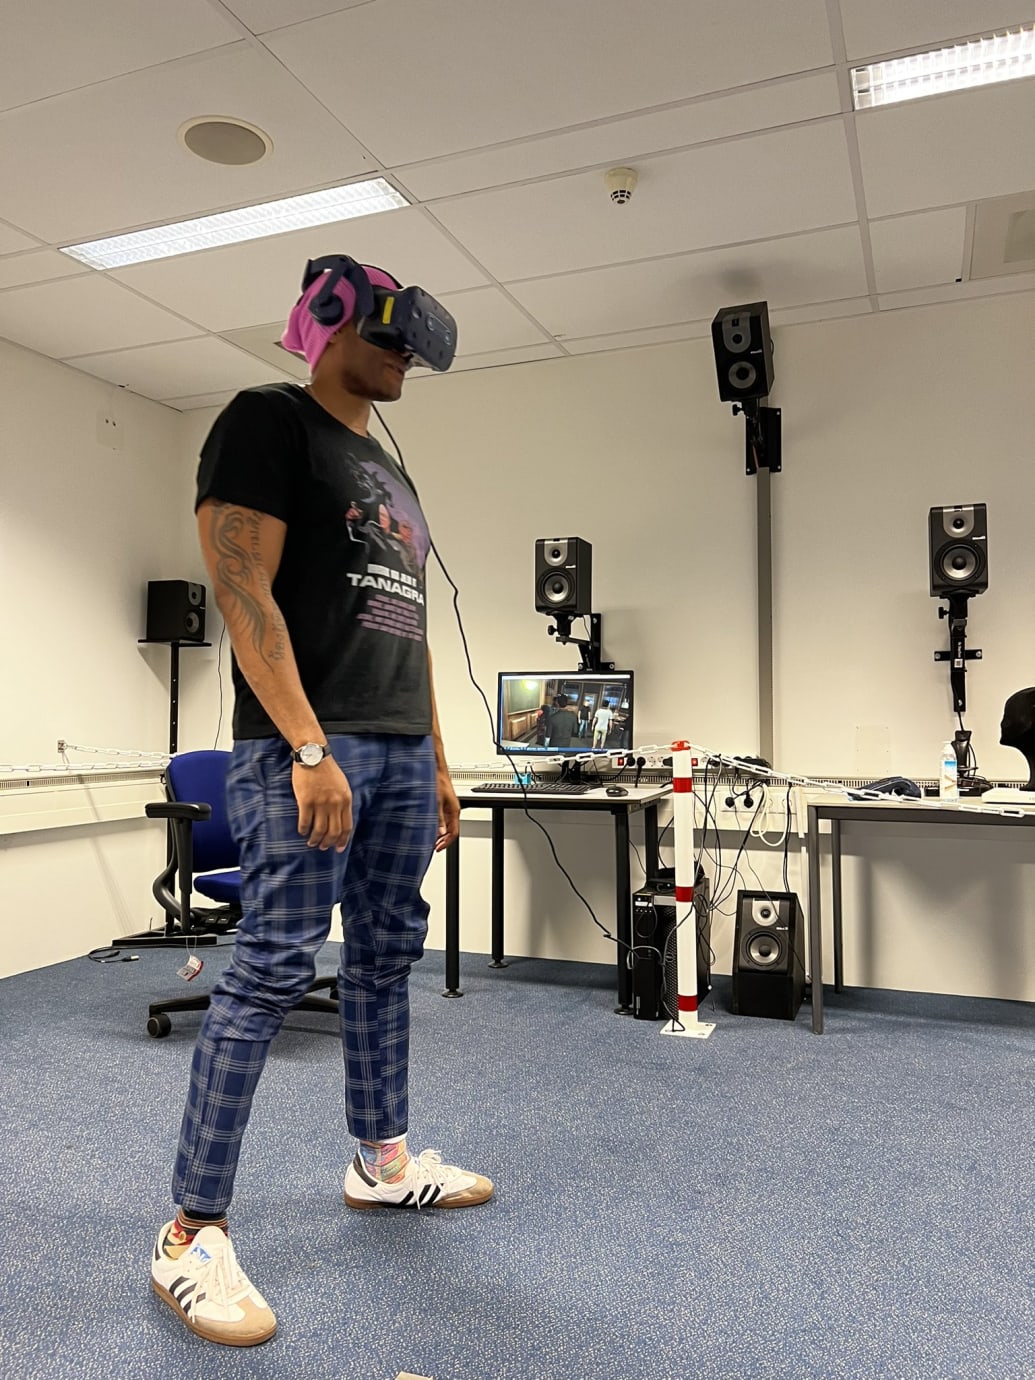 Zeus Tipado stands wearing a VR headset.